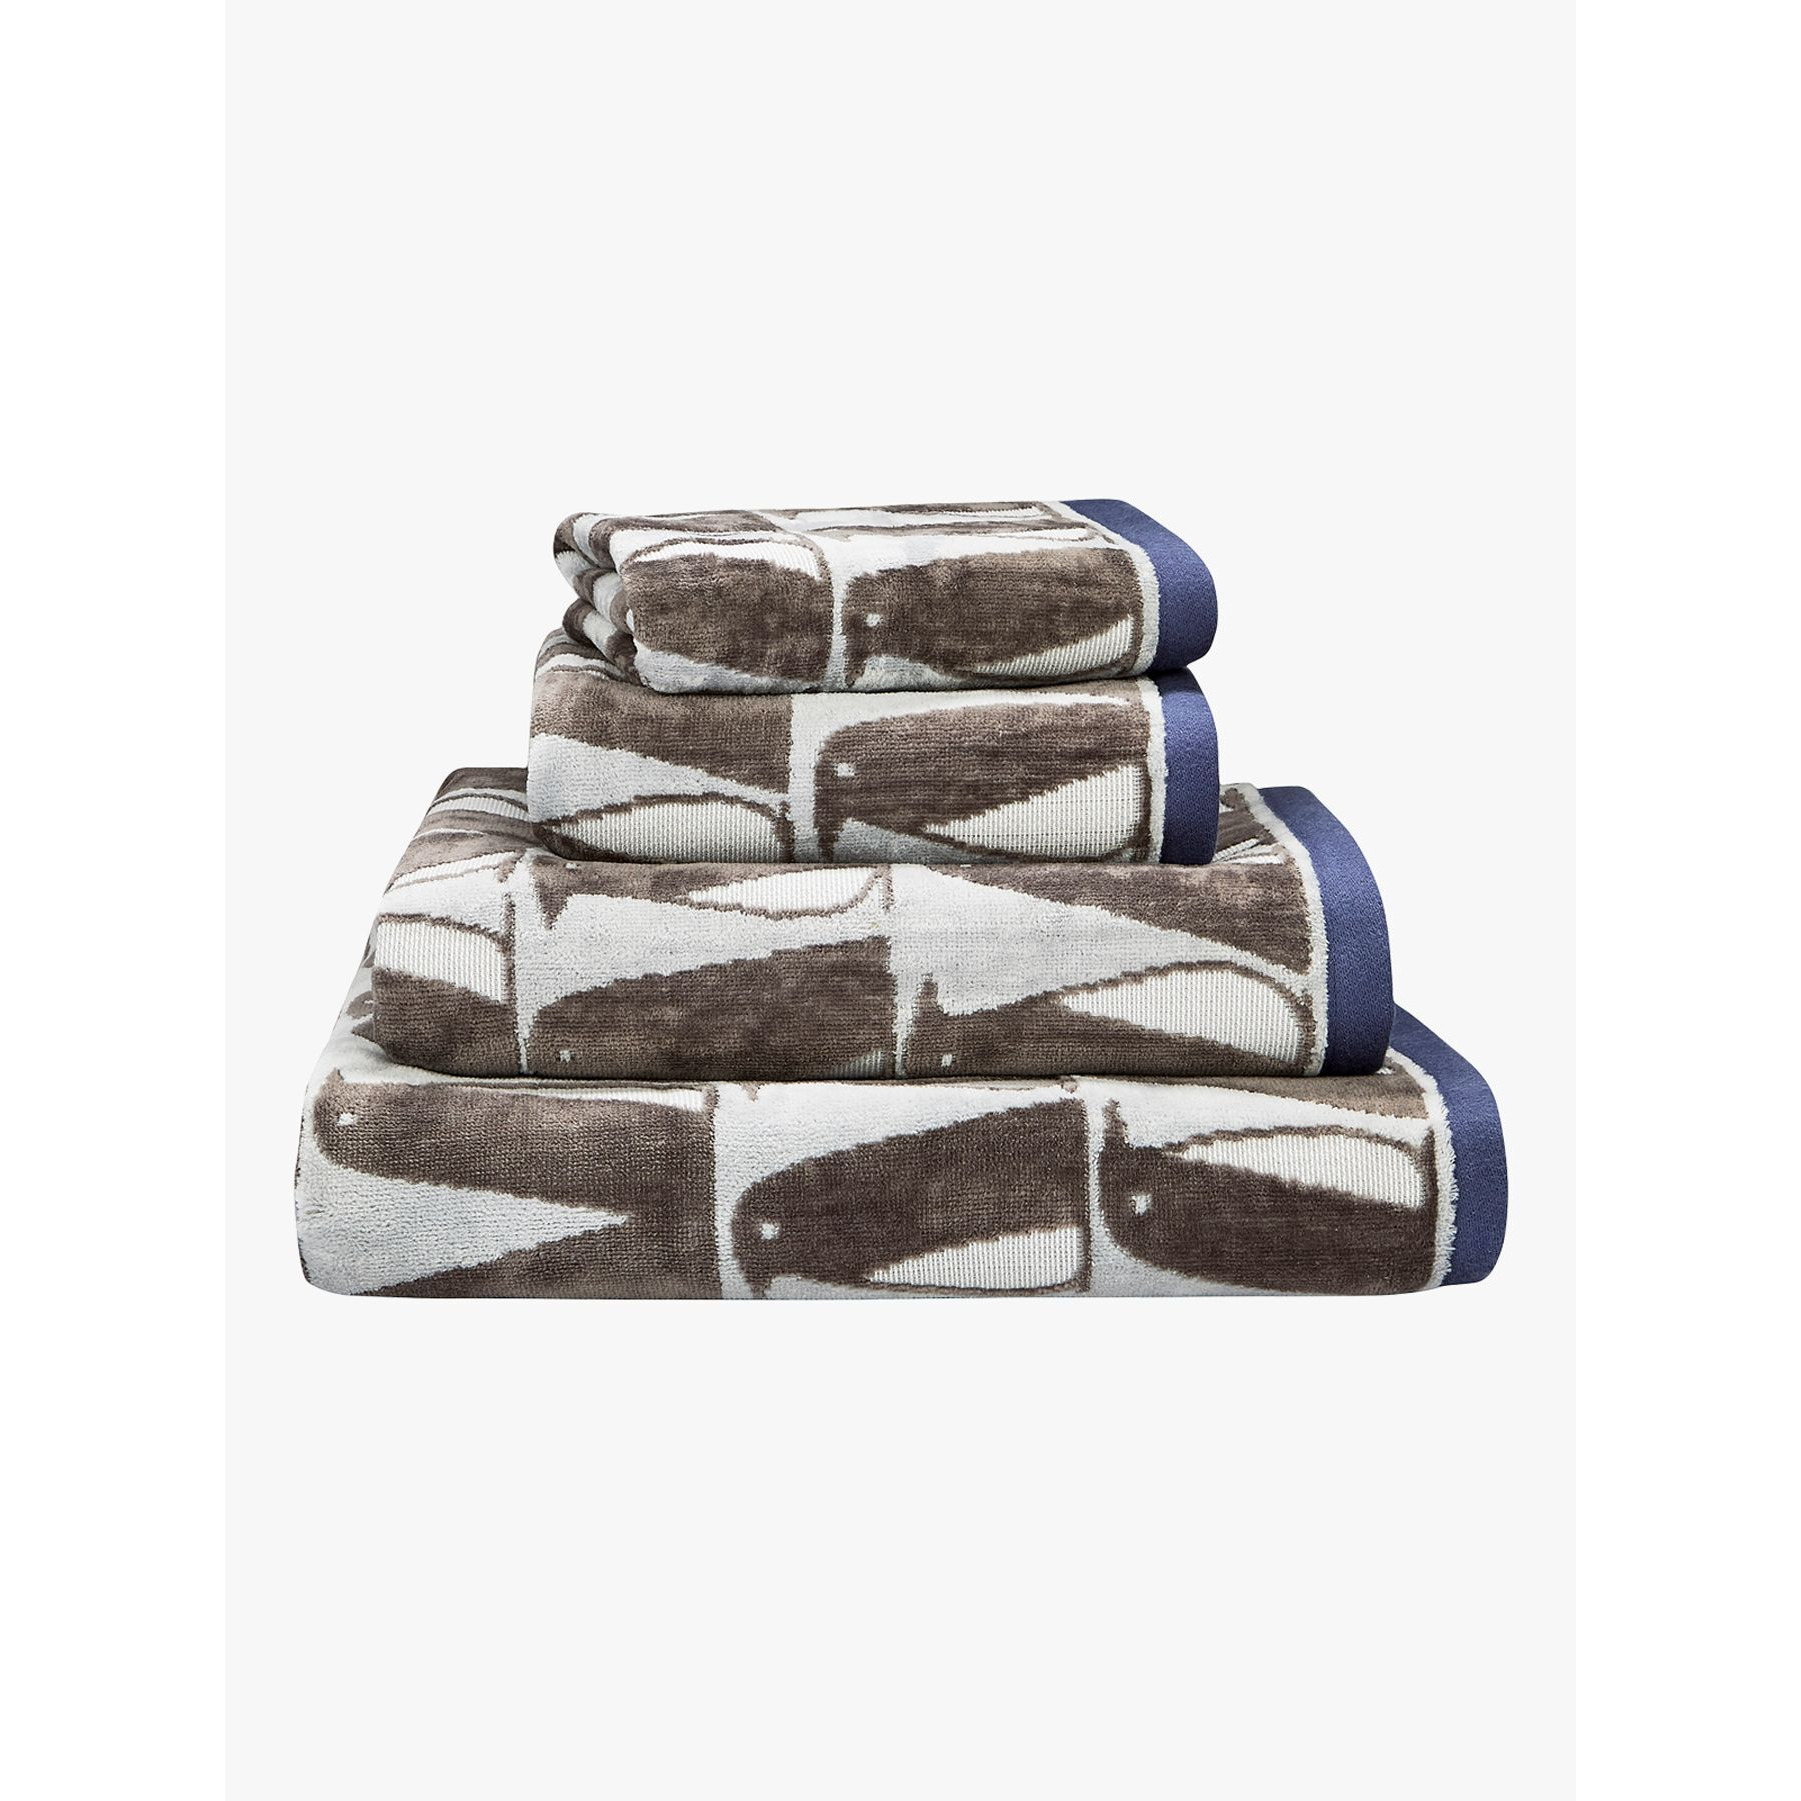 Scion Pedro Towels, Ice - image 1